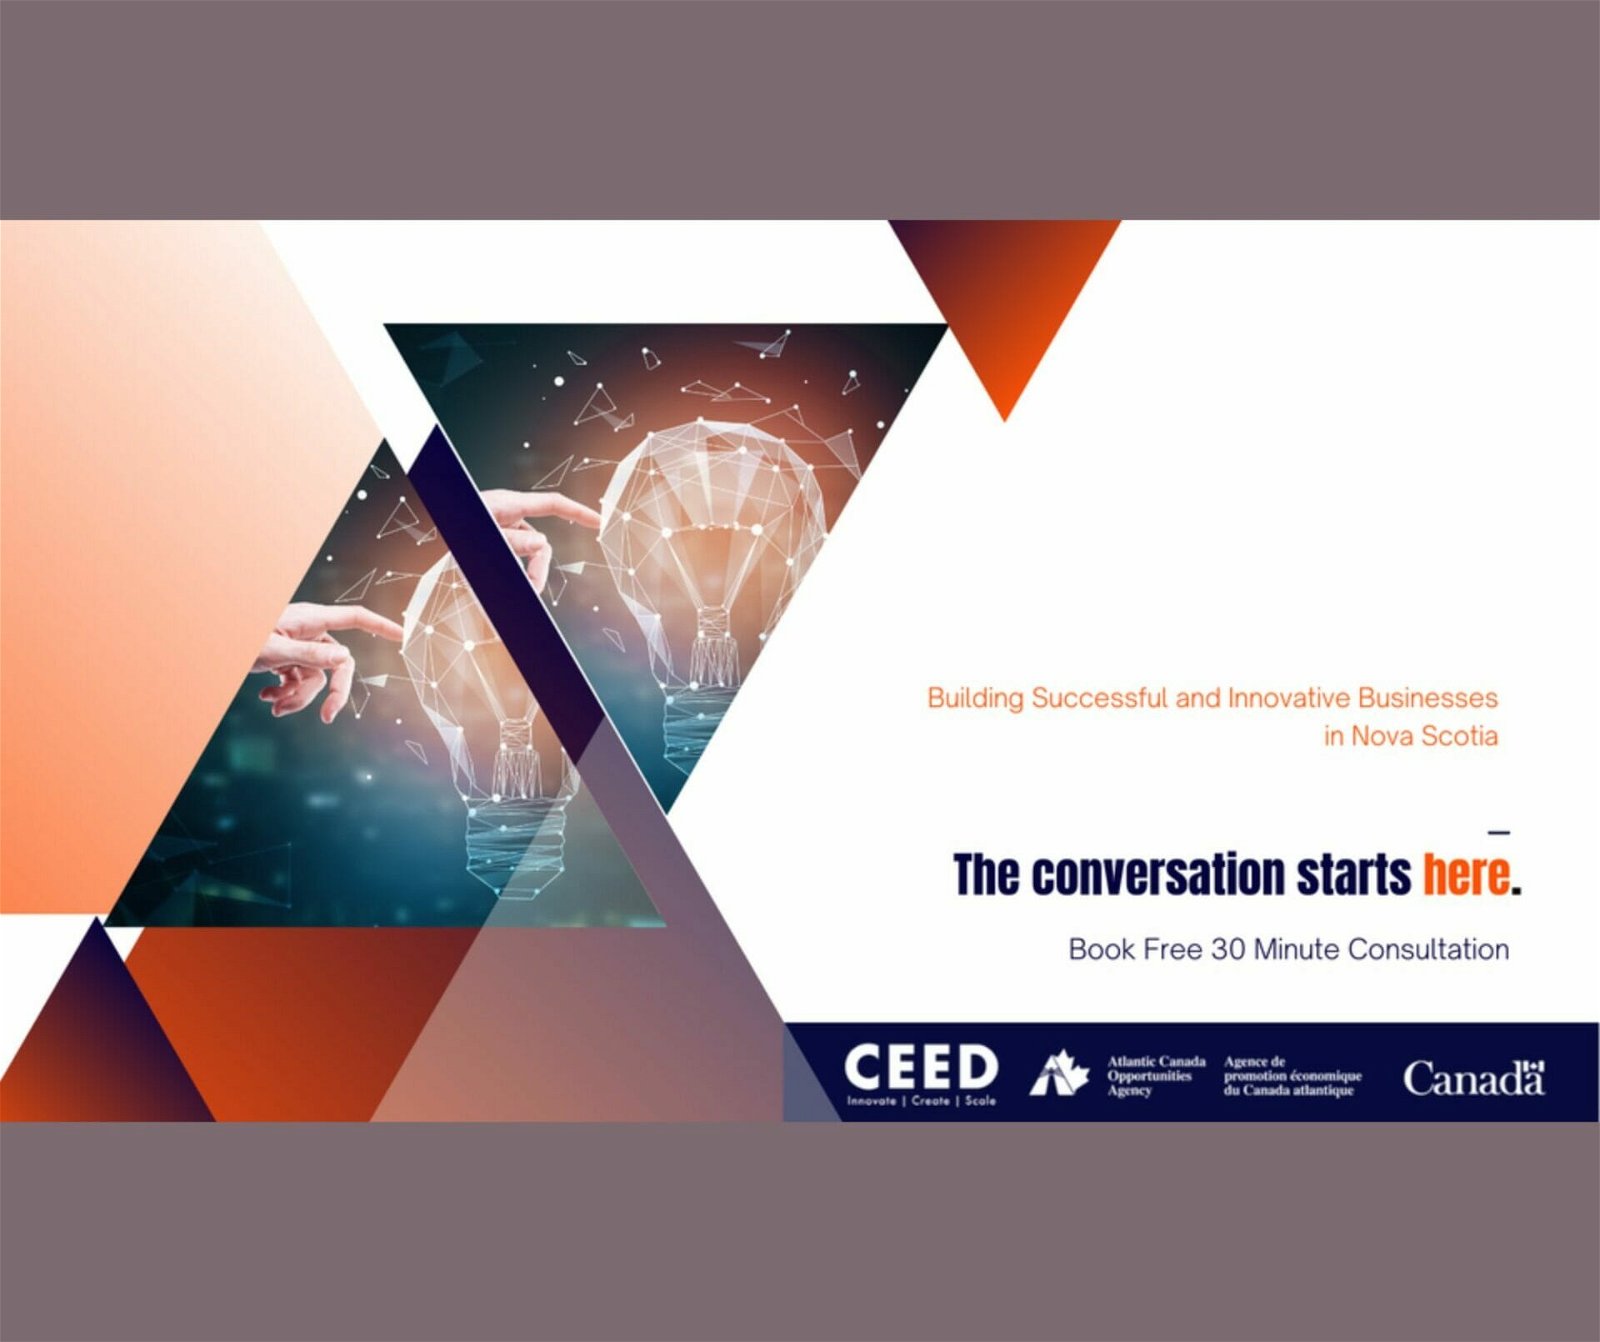 Centre for Entrepreneurship Education and Development (CEED)